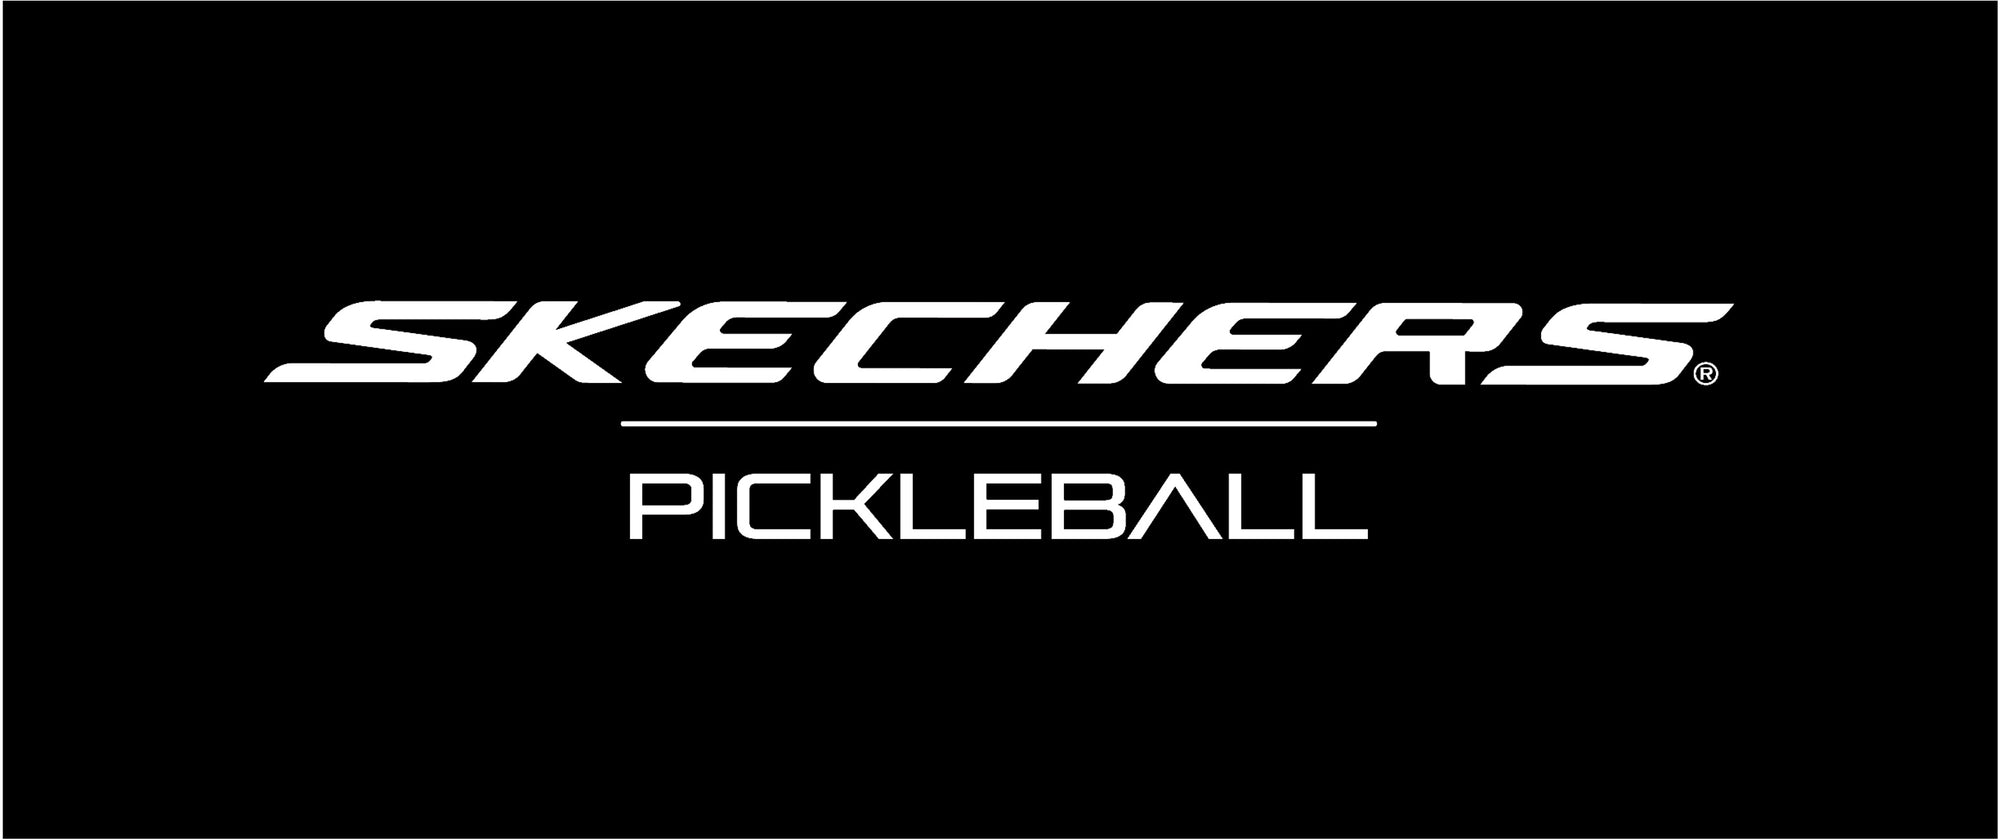 Pickleball Superstore - Skechers the #1 selling pickleball shoe